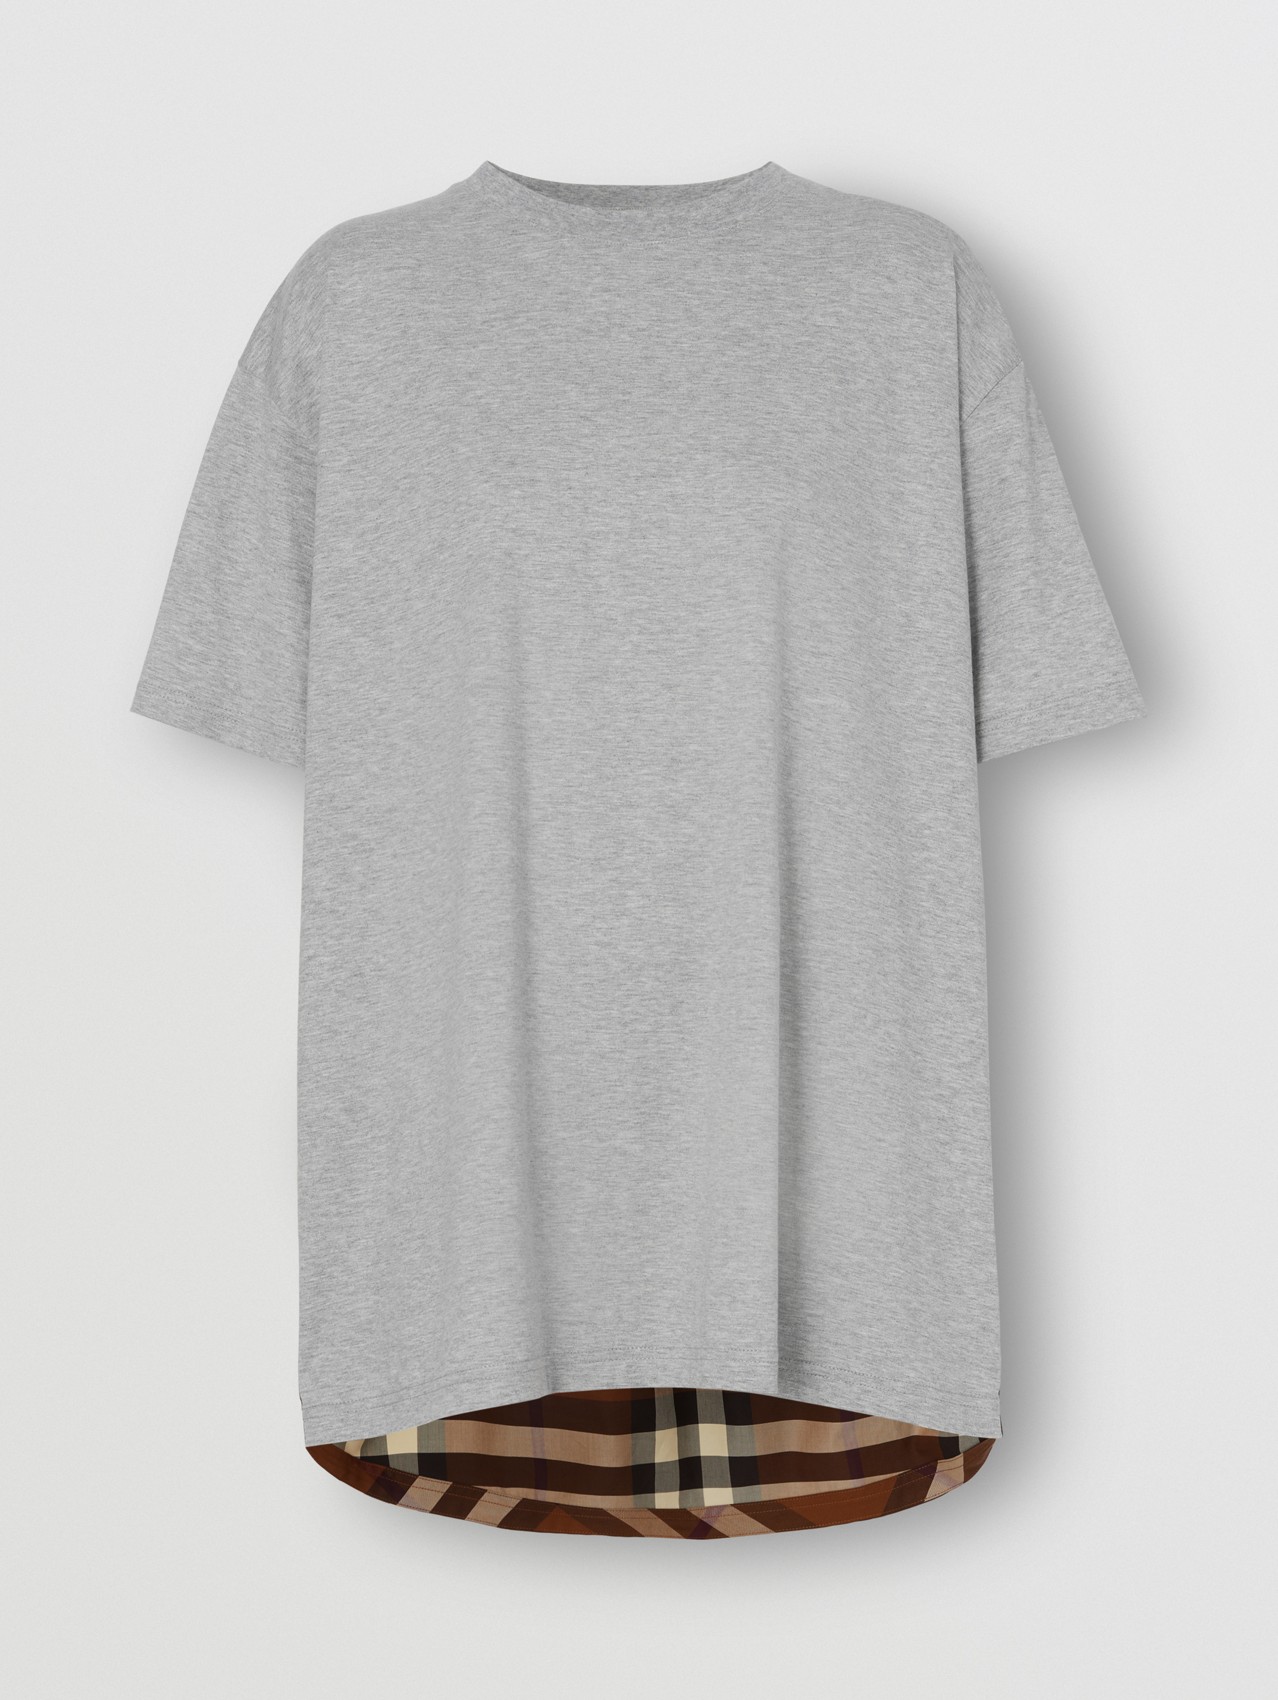 Camiseta oversize de algodão com recorte xadrez in Cinza Claro Mesclado